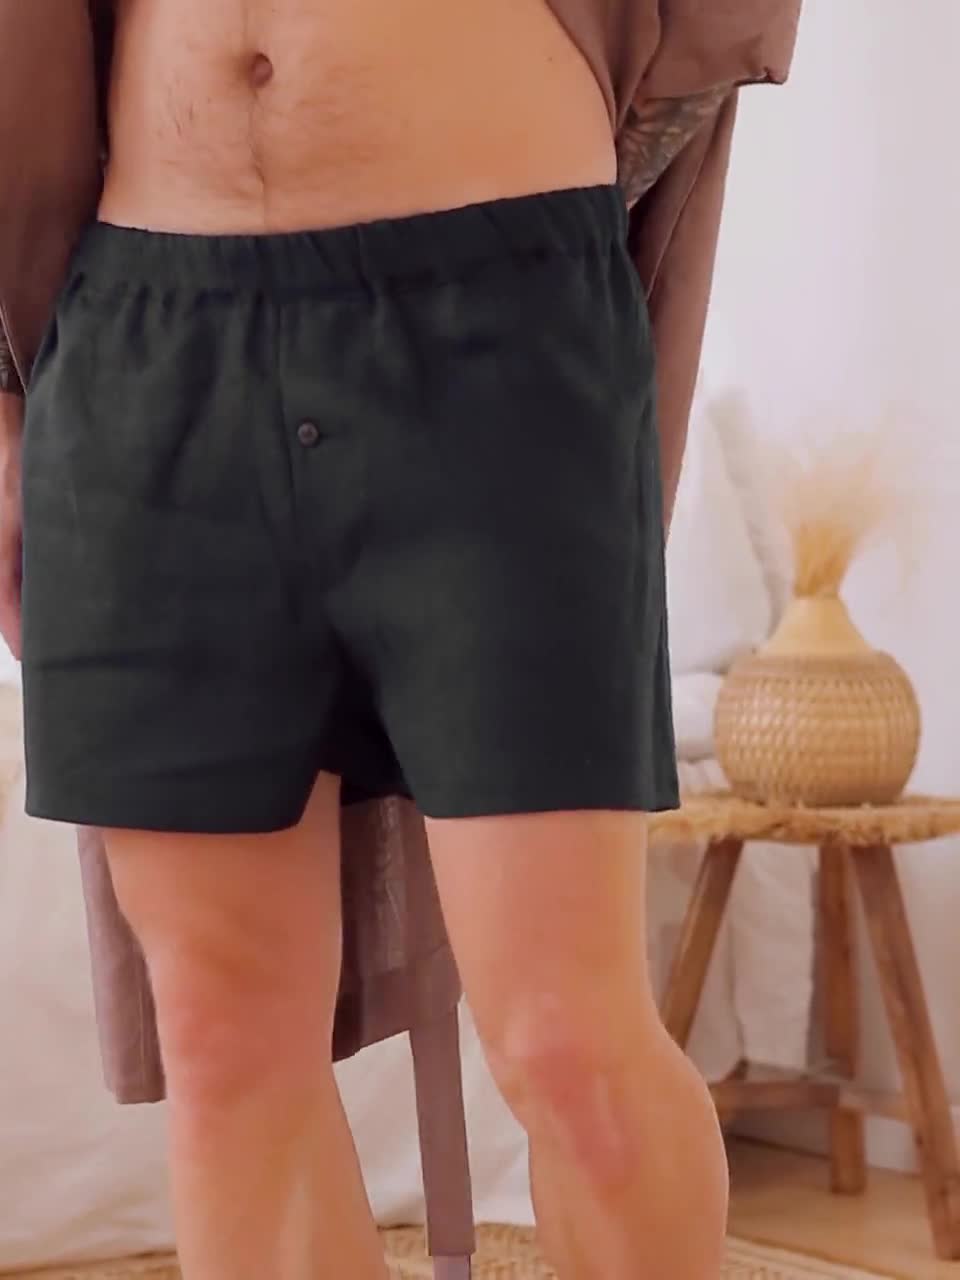 Slaap shorts cadeau voor hem Boxer voor mannen Kleding Jongenskleding Ondergoed Basic shorts Mans biologische kleding Natuurlijke shorts Mens linnen ondergoed 